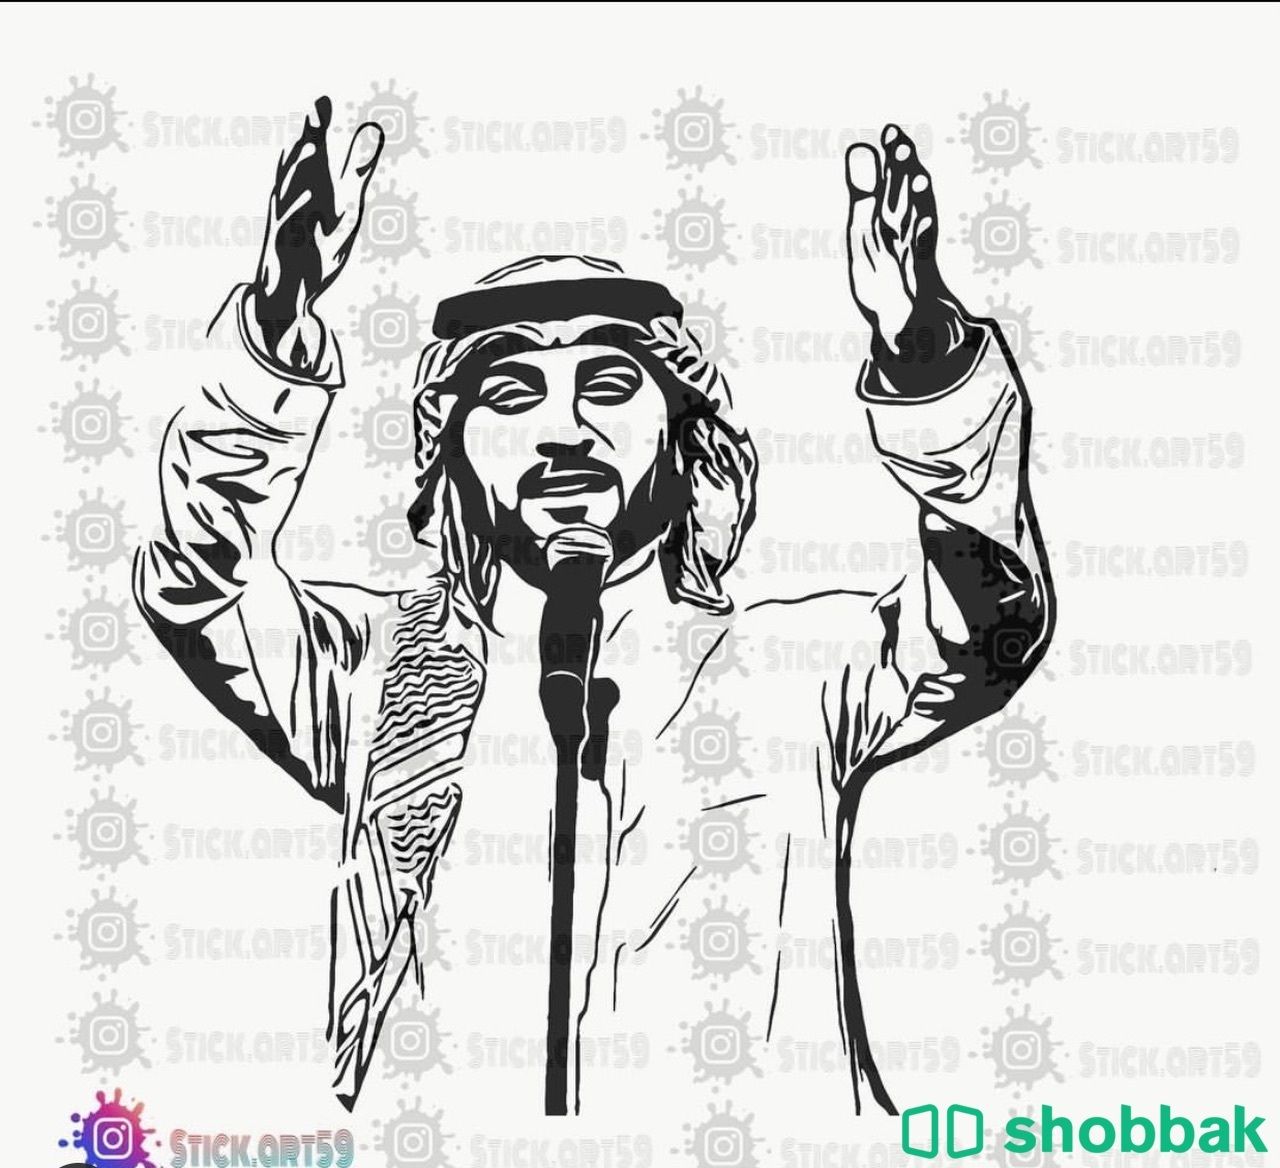 استكرات جدارية لاي تصميم انت تحبه Shobbak Saudi Arabia